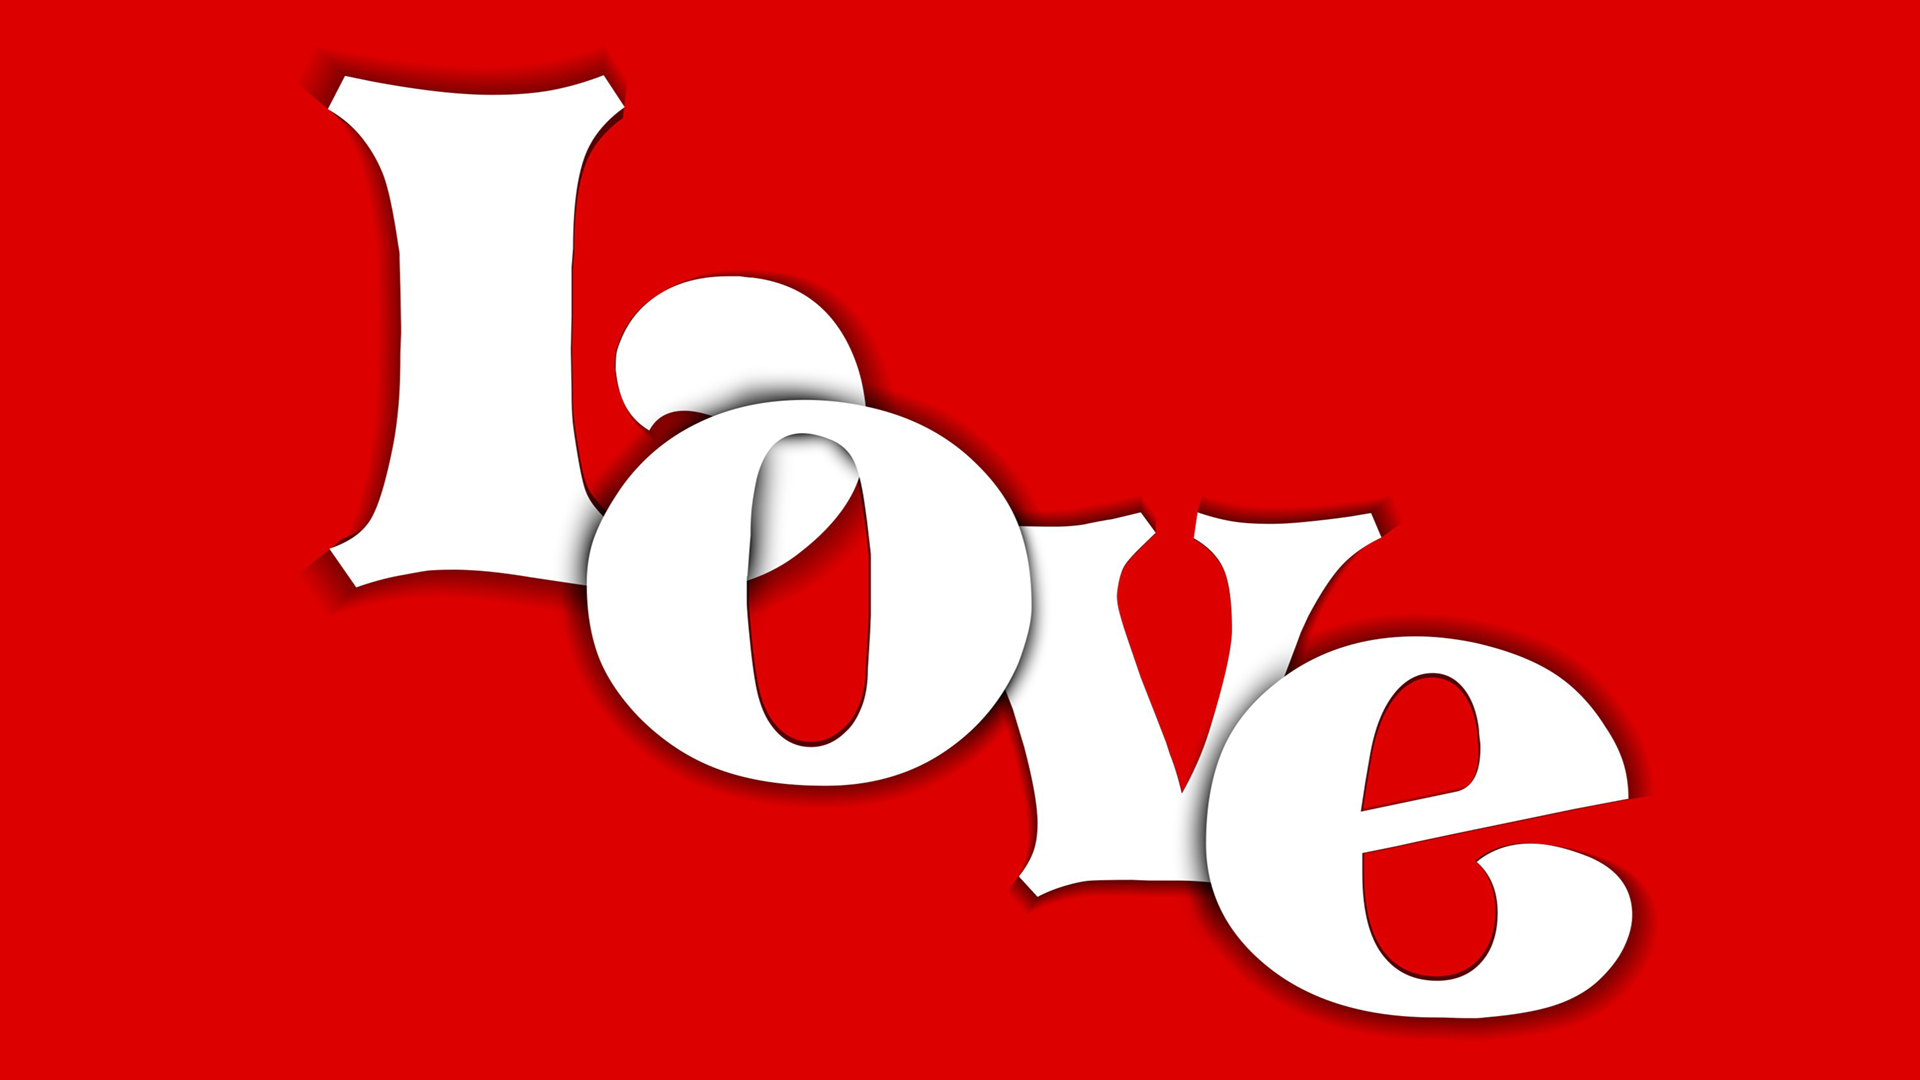 Card Love Red Valentine 039 S Day Word 1920x1080